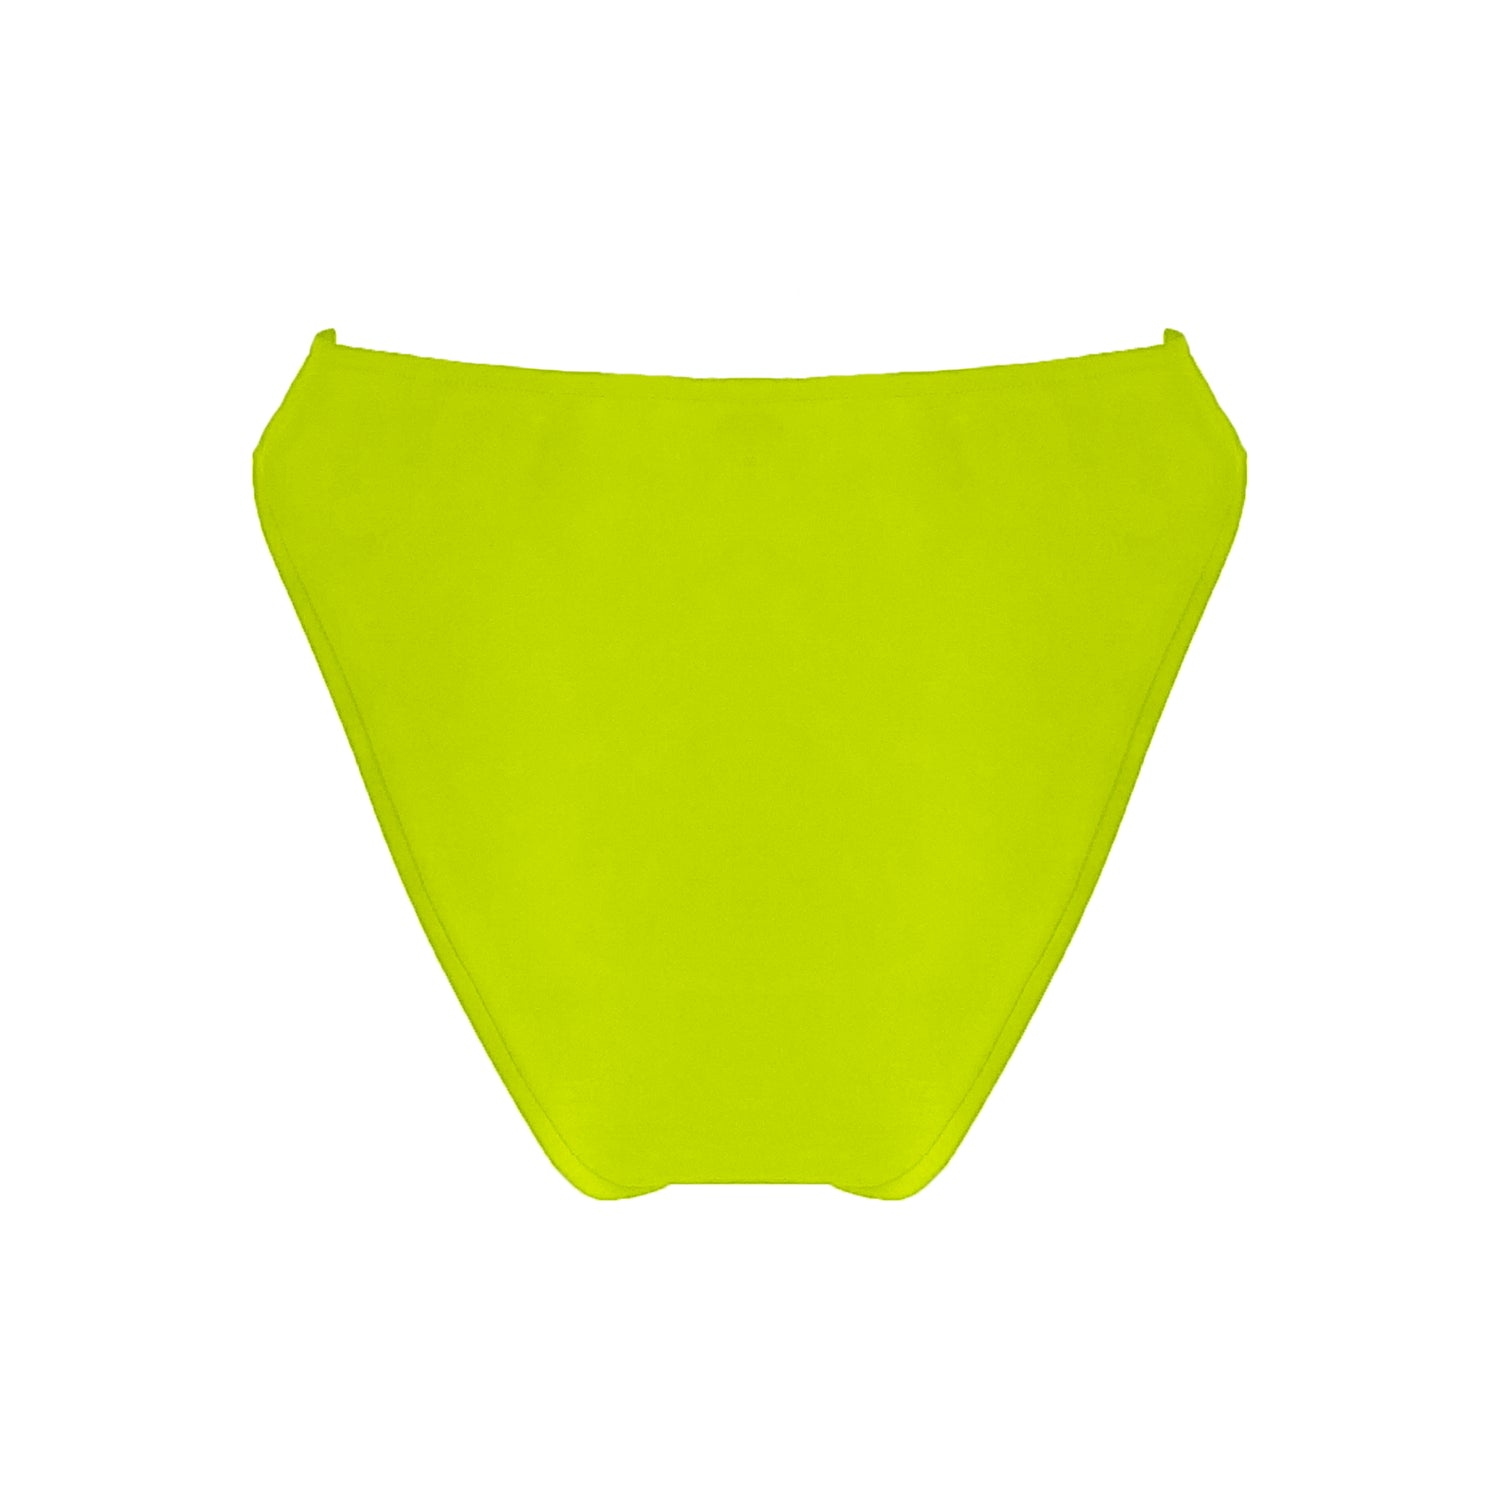 Back view of Bright yellow High waist bikini bottom with high cut legs and cheeky bum coverage.